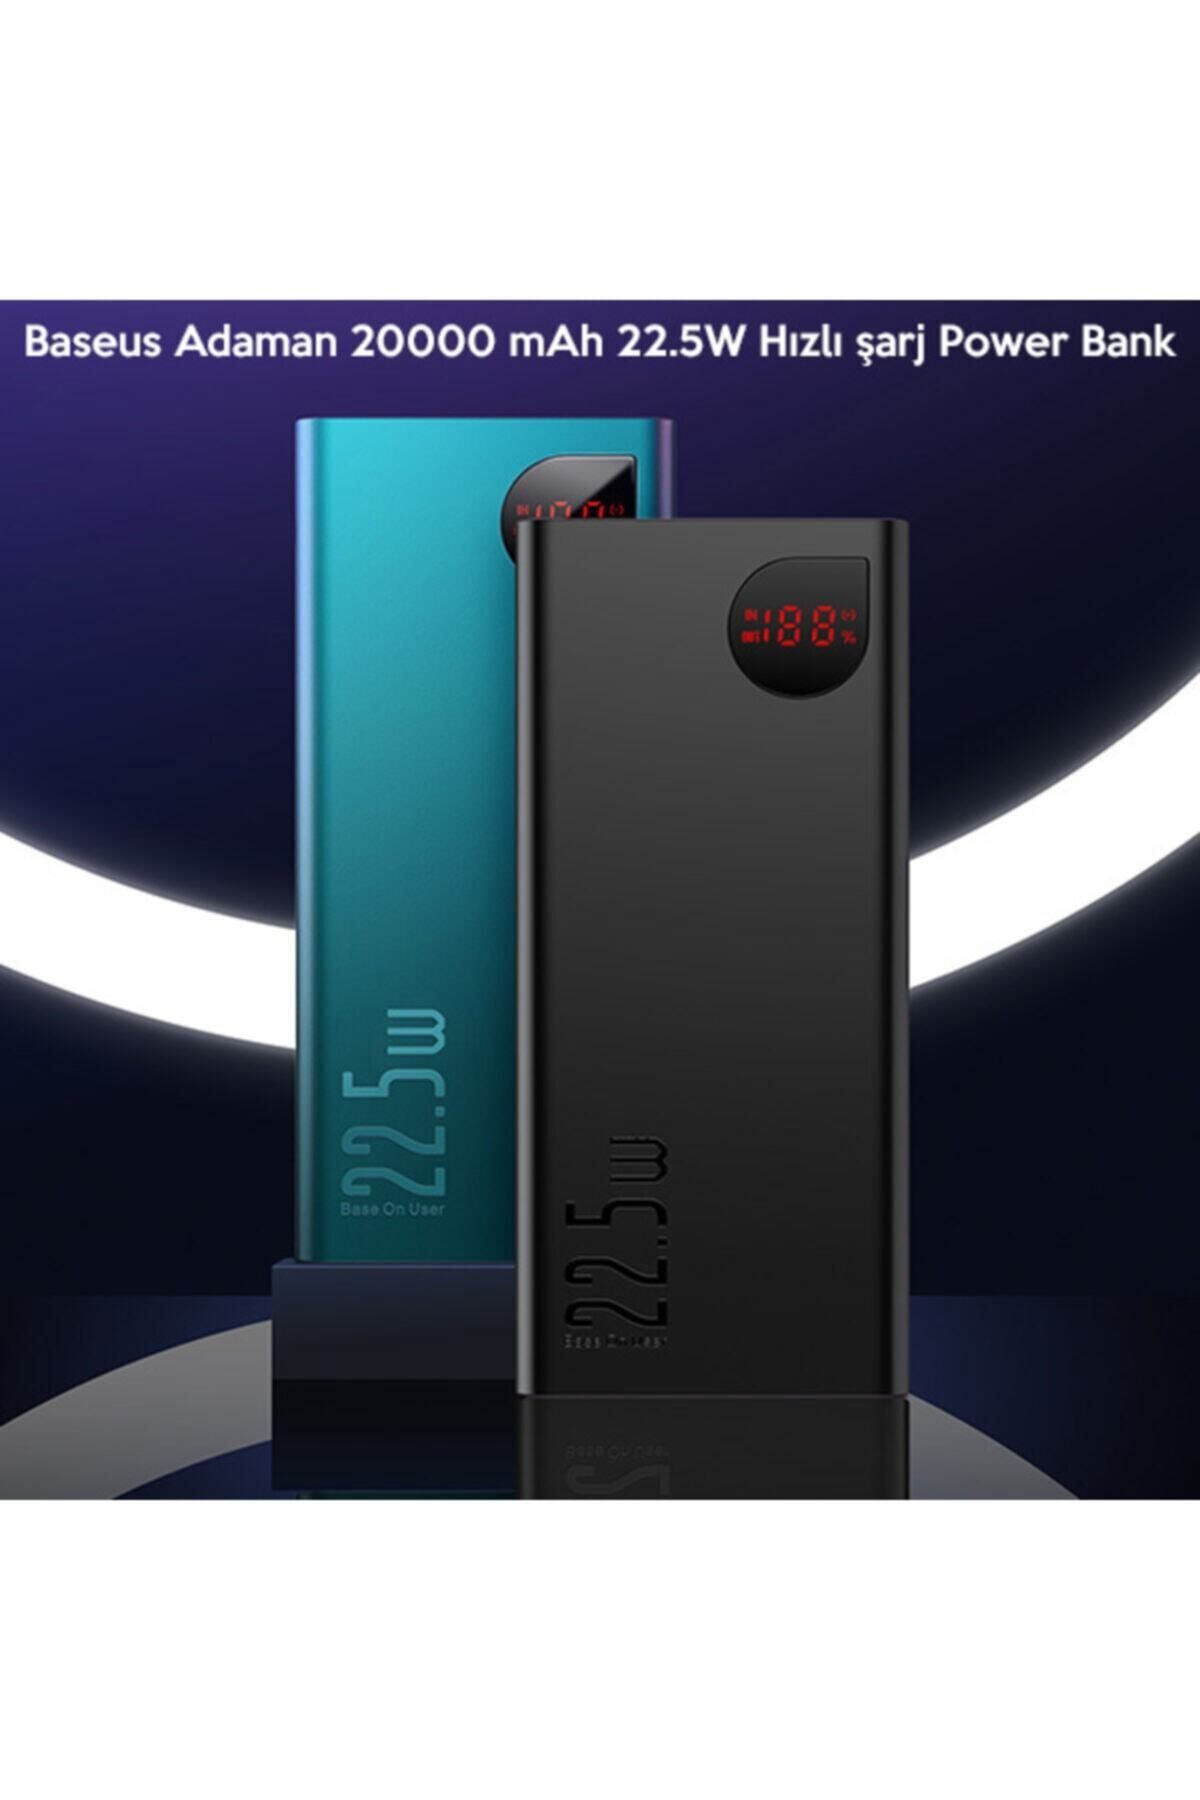 Baseus Adaman 20000 Mah 22.5w Hızlı Şarj Power Bank 2 Usb 1 Usb Type C